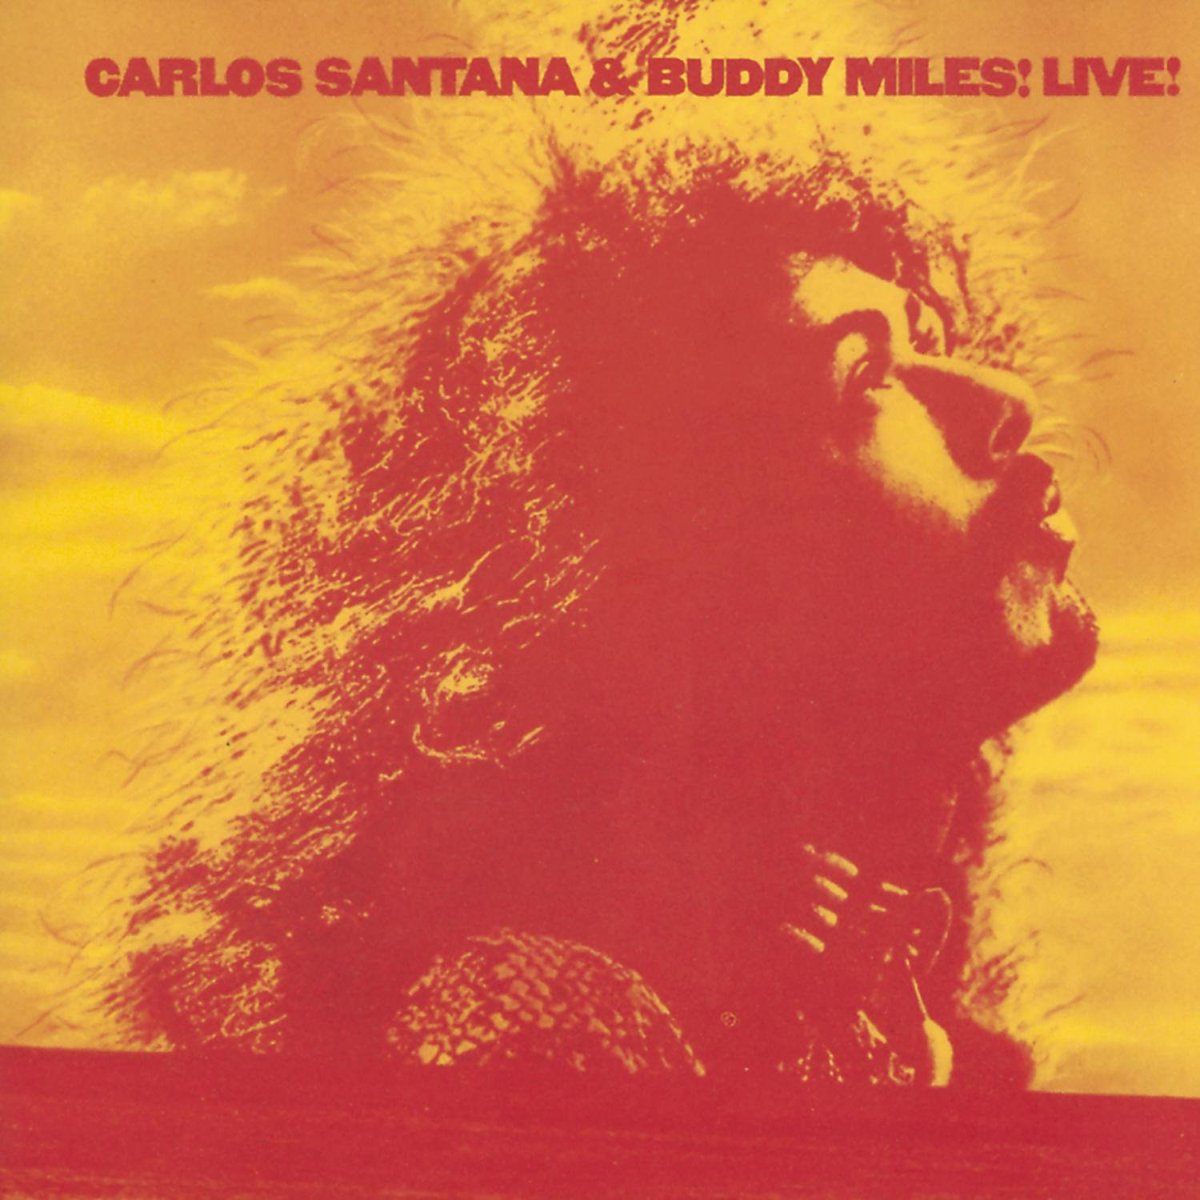 ‘Carlos Santana & Buddy Miles! Live!’ - Carlos Santana y Buddy Miles